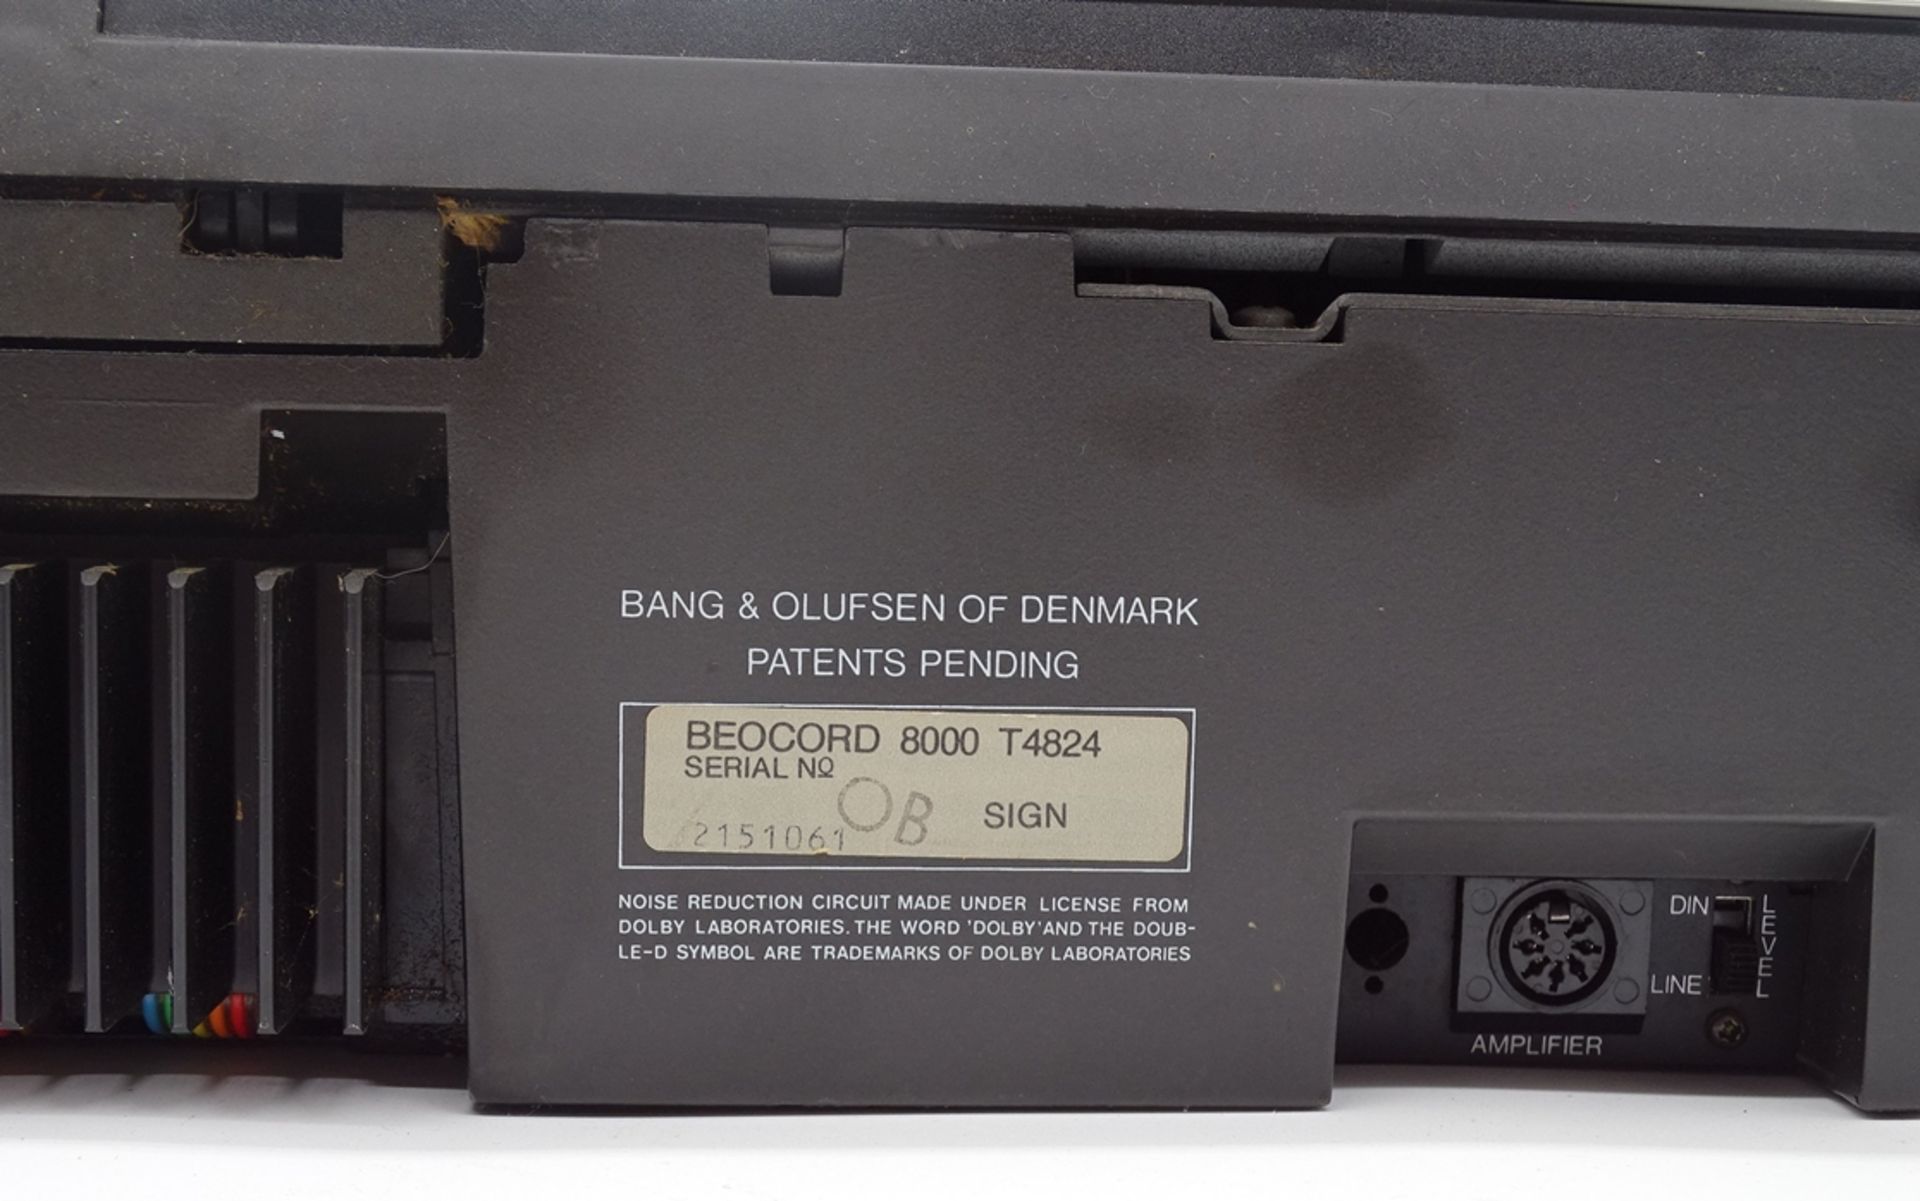 Bang & Olufsen of Denmark, Beocord 8000, Funkion nicht überprüft, 52 x 28cm - Image 8 of 9